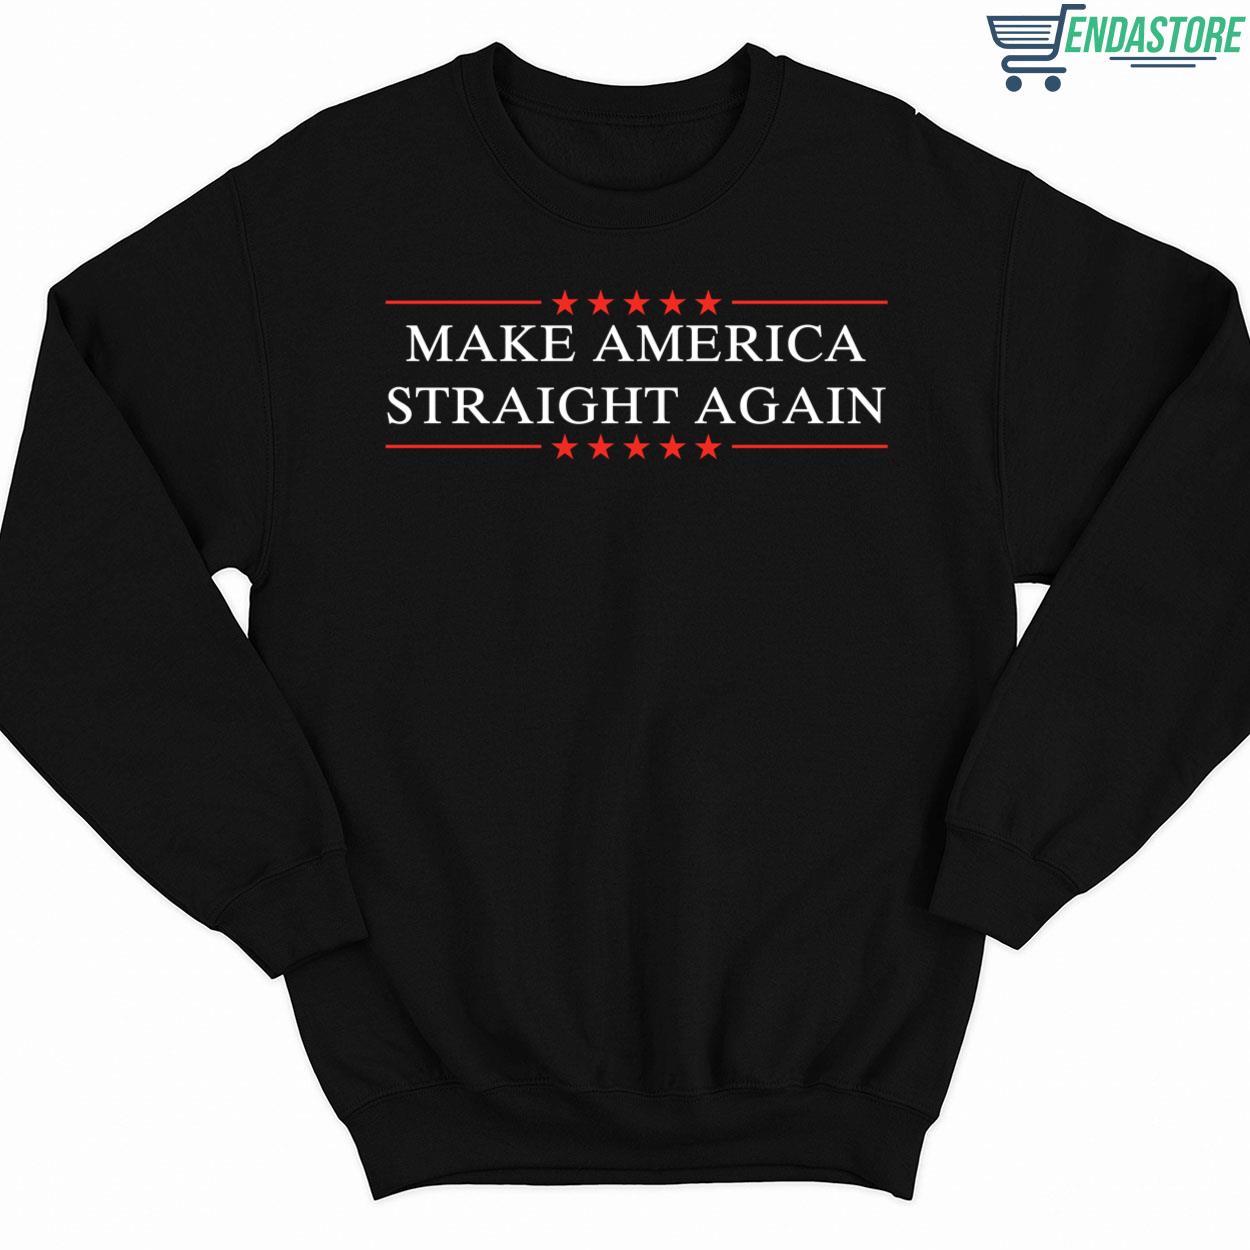 Make America Straight Again Sweatshirt - Endastore.com